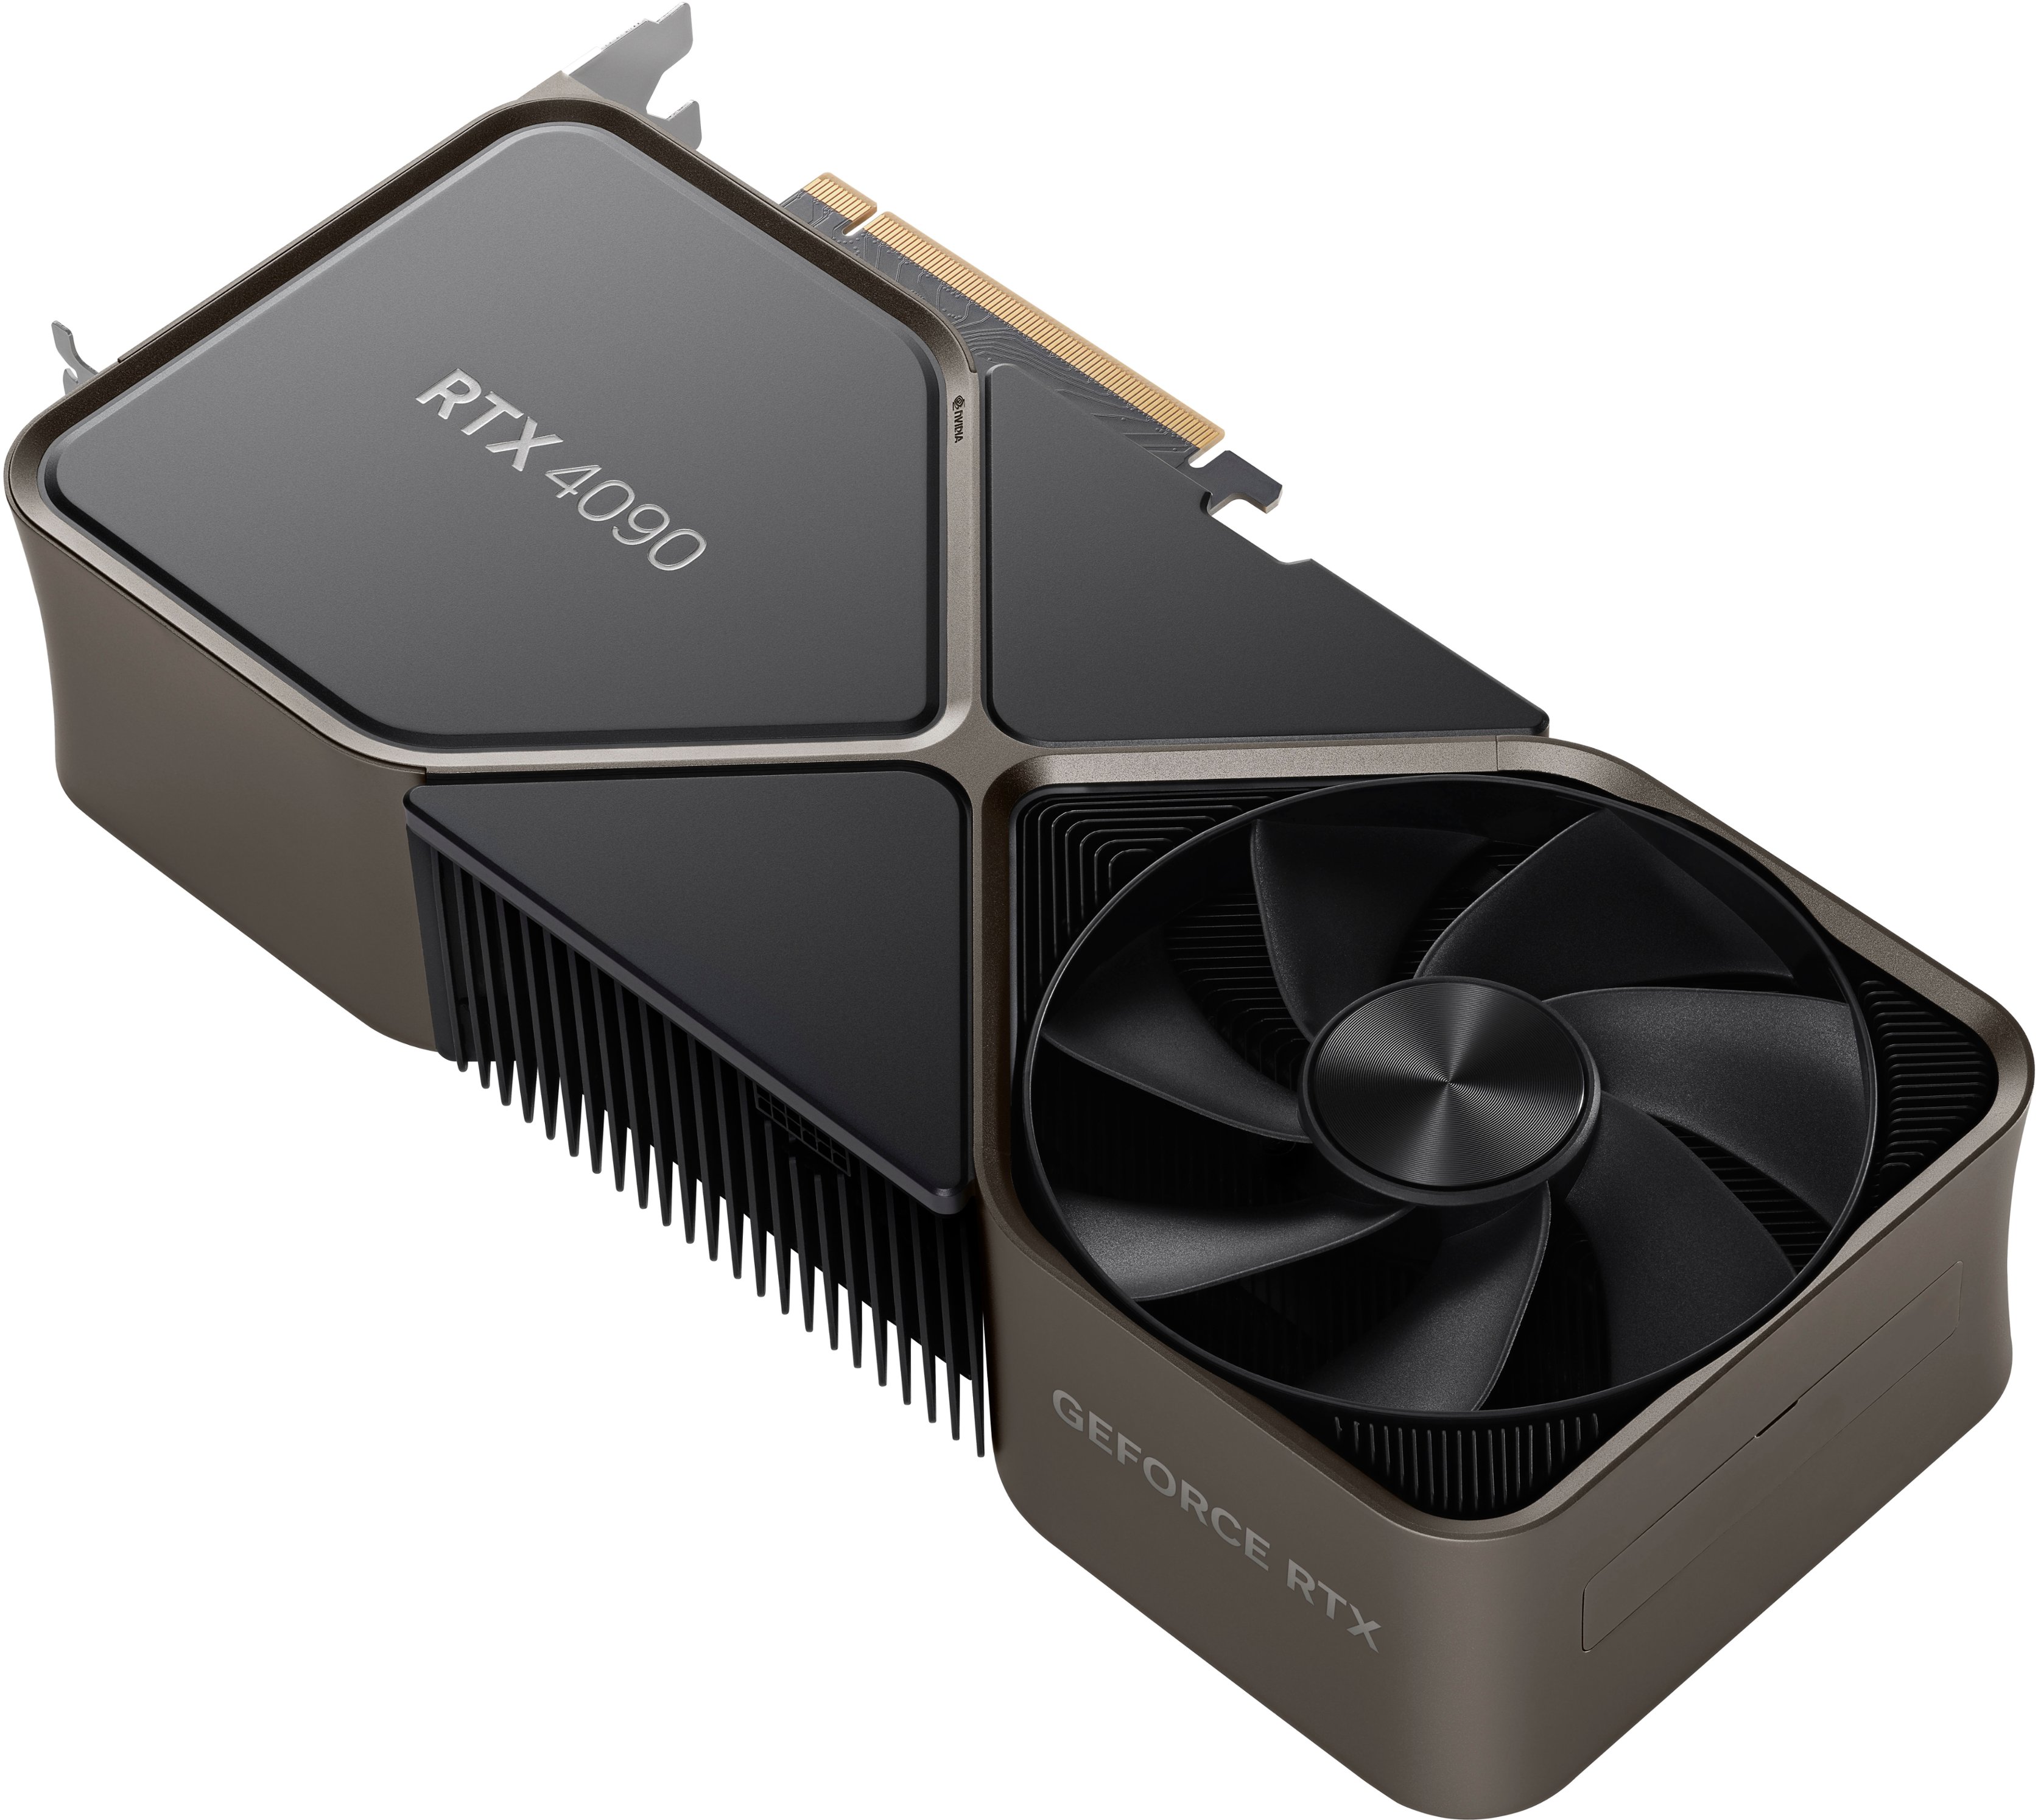 NVIDIA GeForce RTX 4090 24GB GDDR6X Graphics Card Titanium/Black  900-1G136-2530-000 - Best Buy